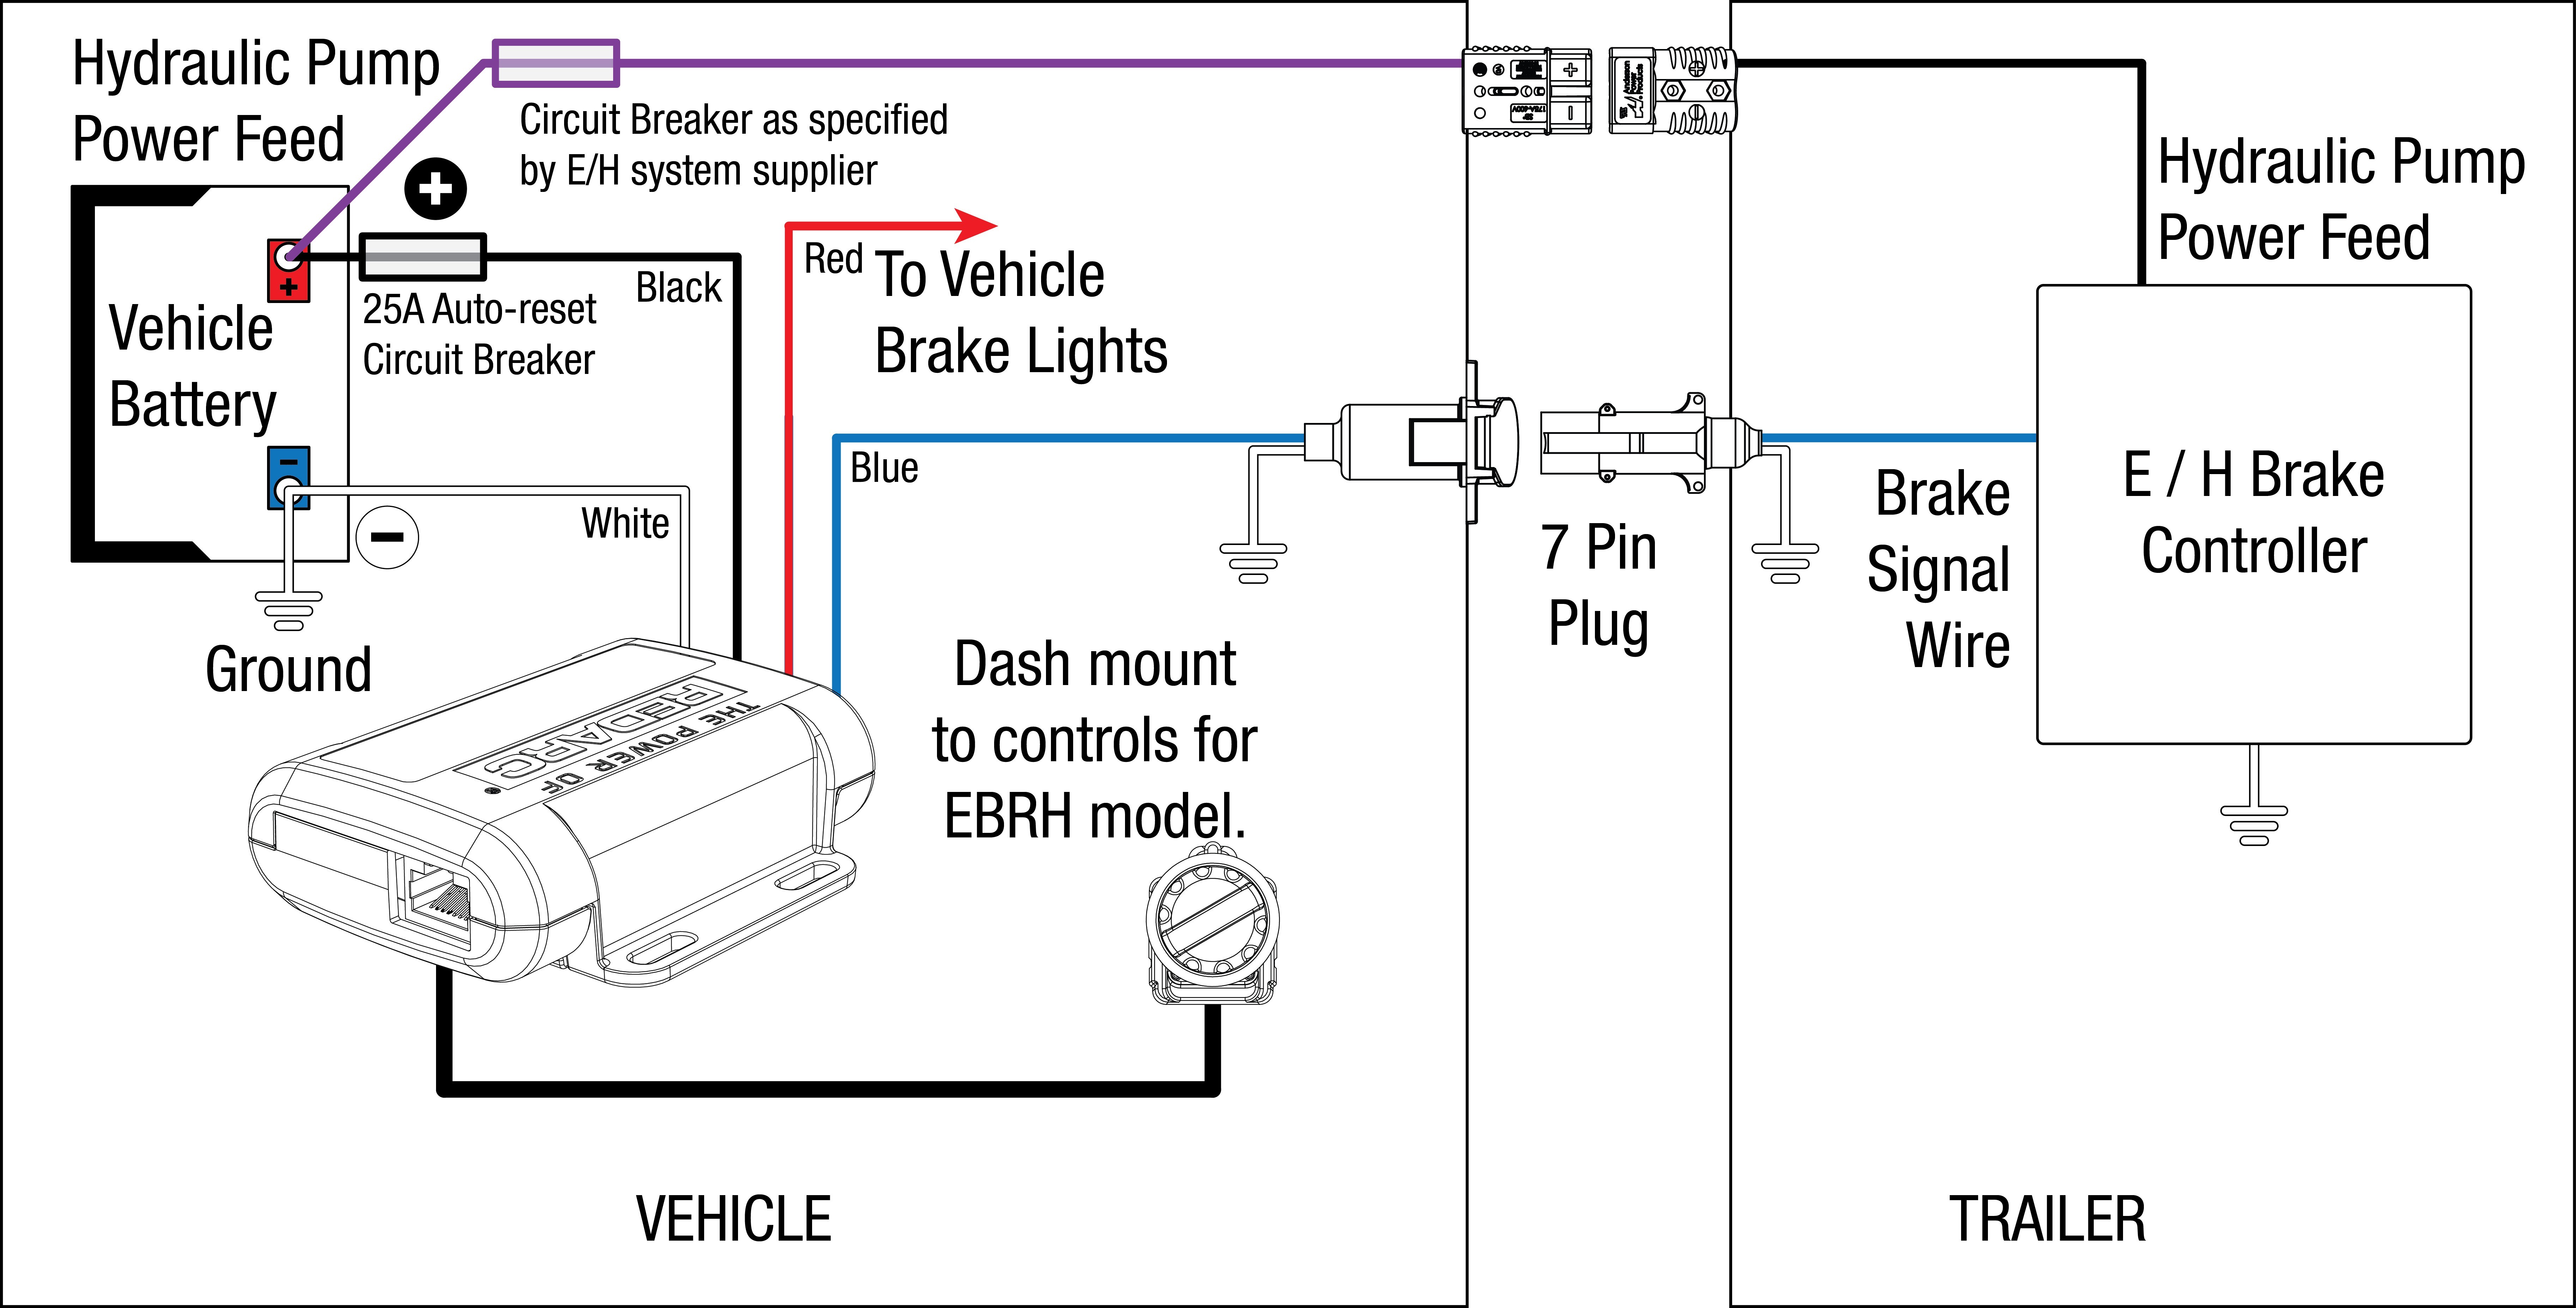 Tail Light Wiring Diagram Chevy Best Electric Trailer Brake Controller Wiring Diagram Webtor